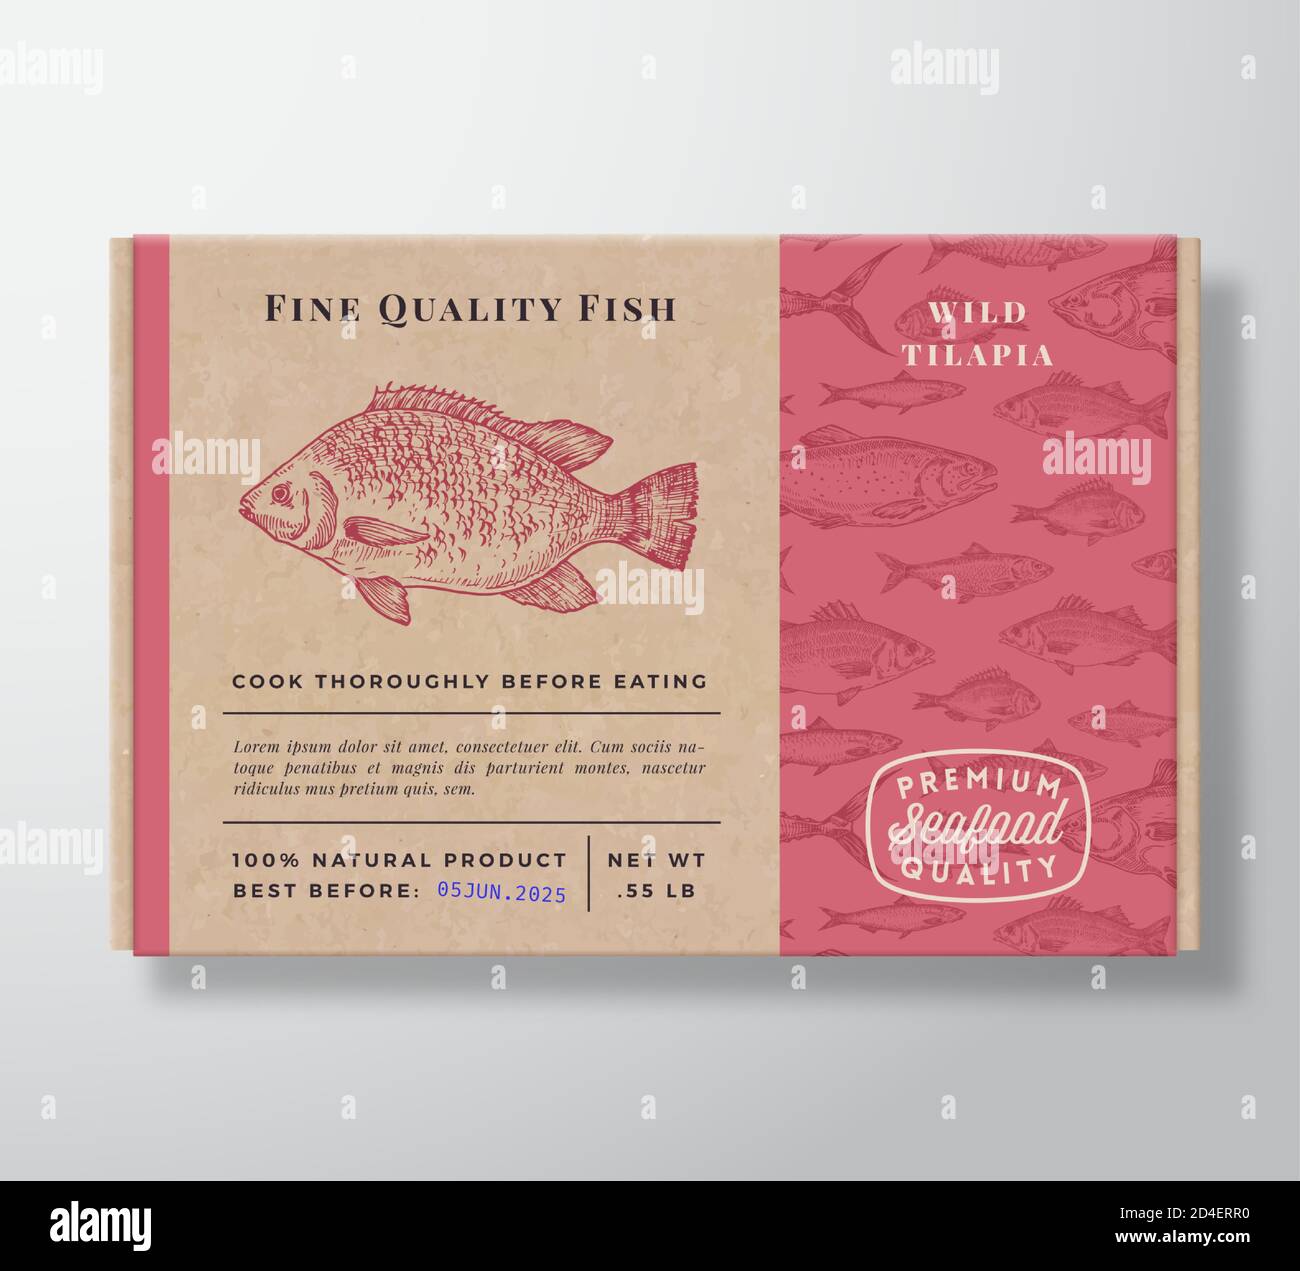 Tilapia Fish Fishing 0.50 Round Sticker Pack